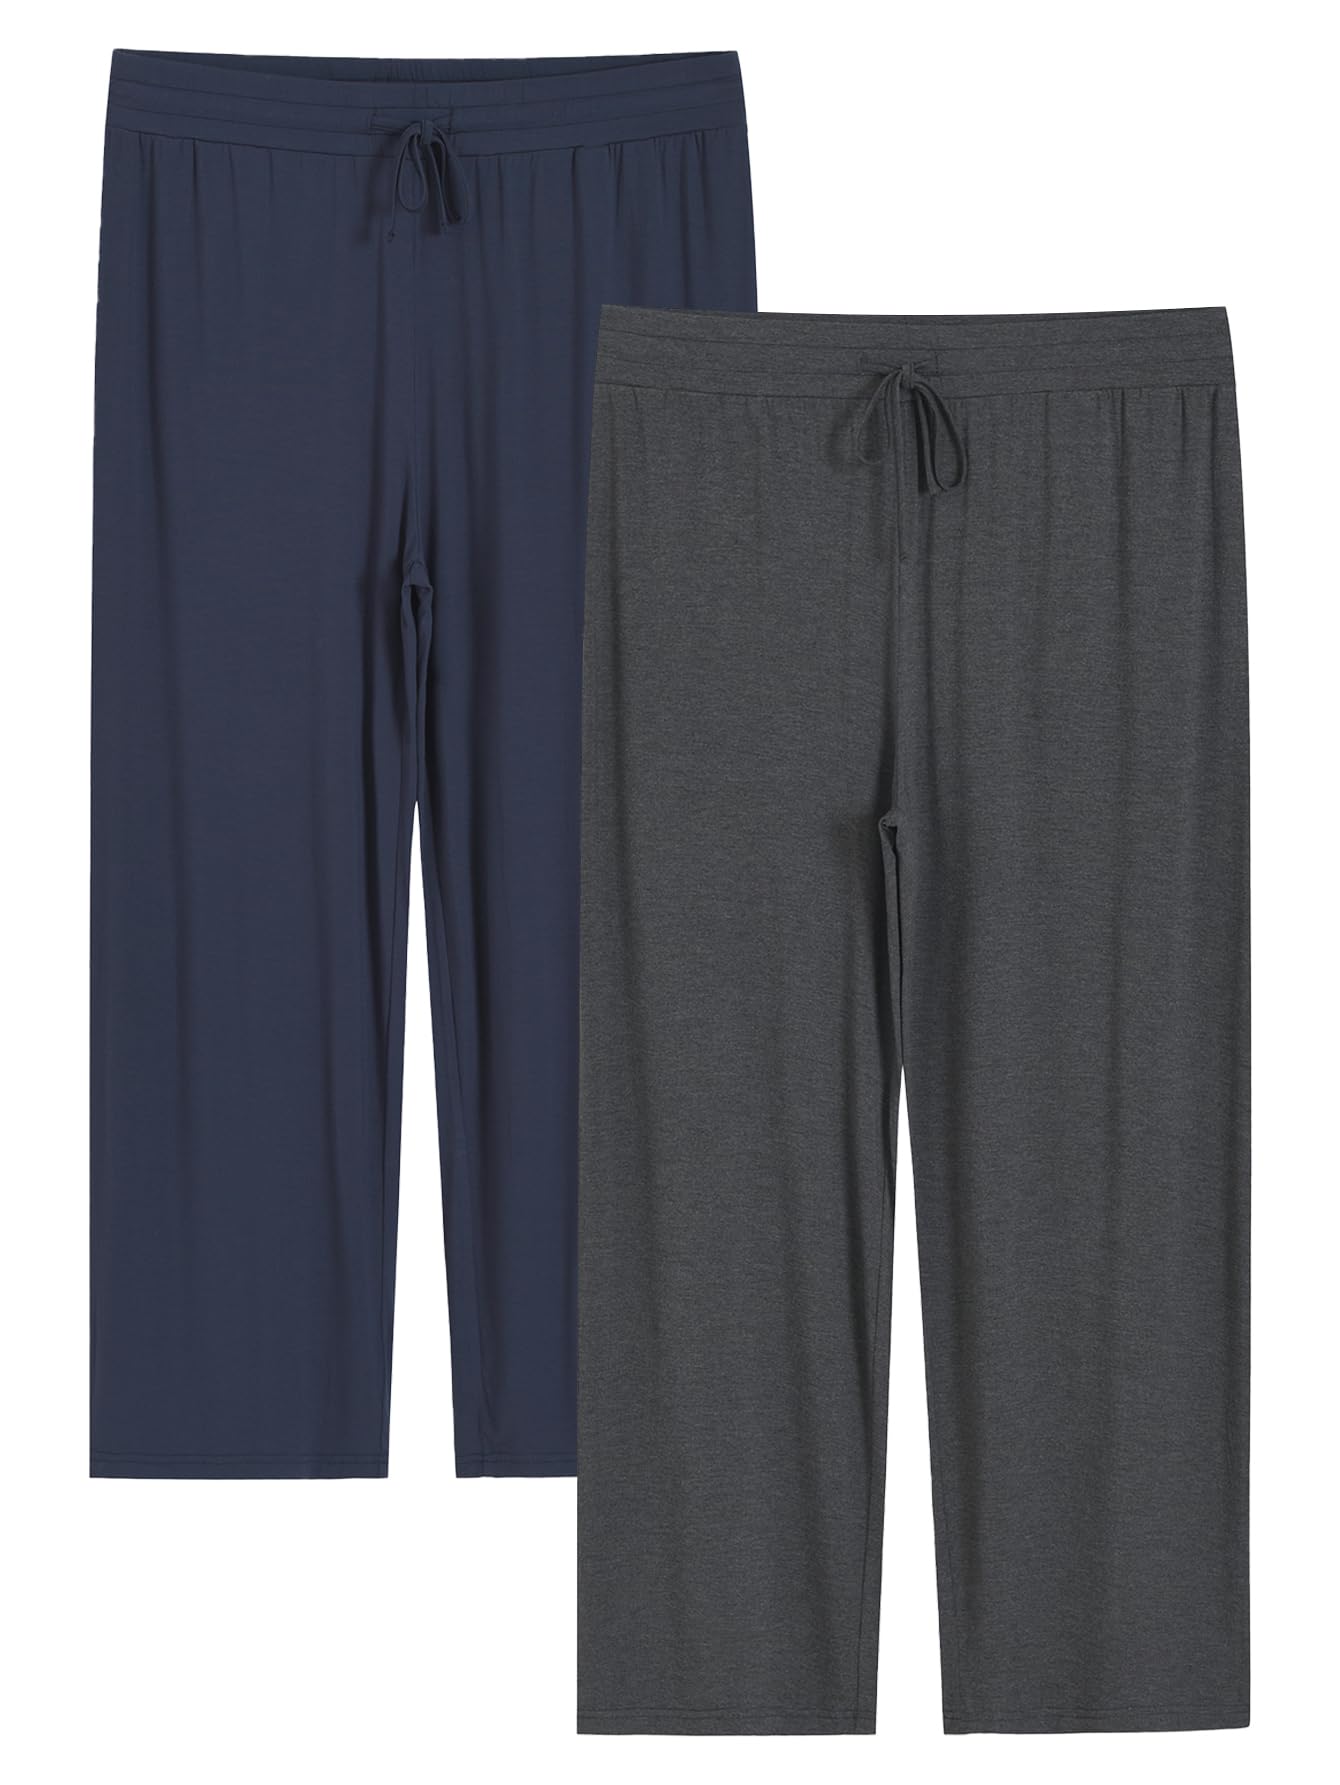 Women's Plus Size Wide Leg Lounge Pants Comfy Palazzo Pajama Pants 1X-5X